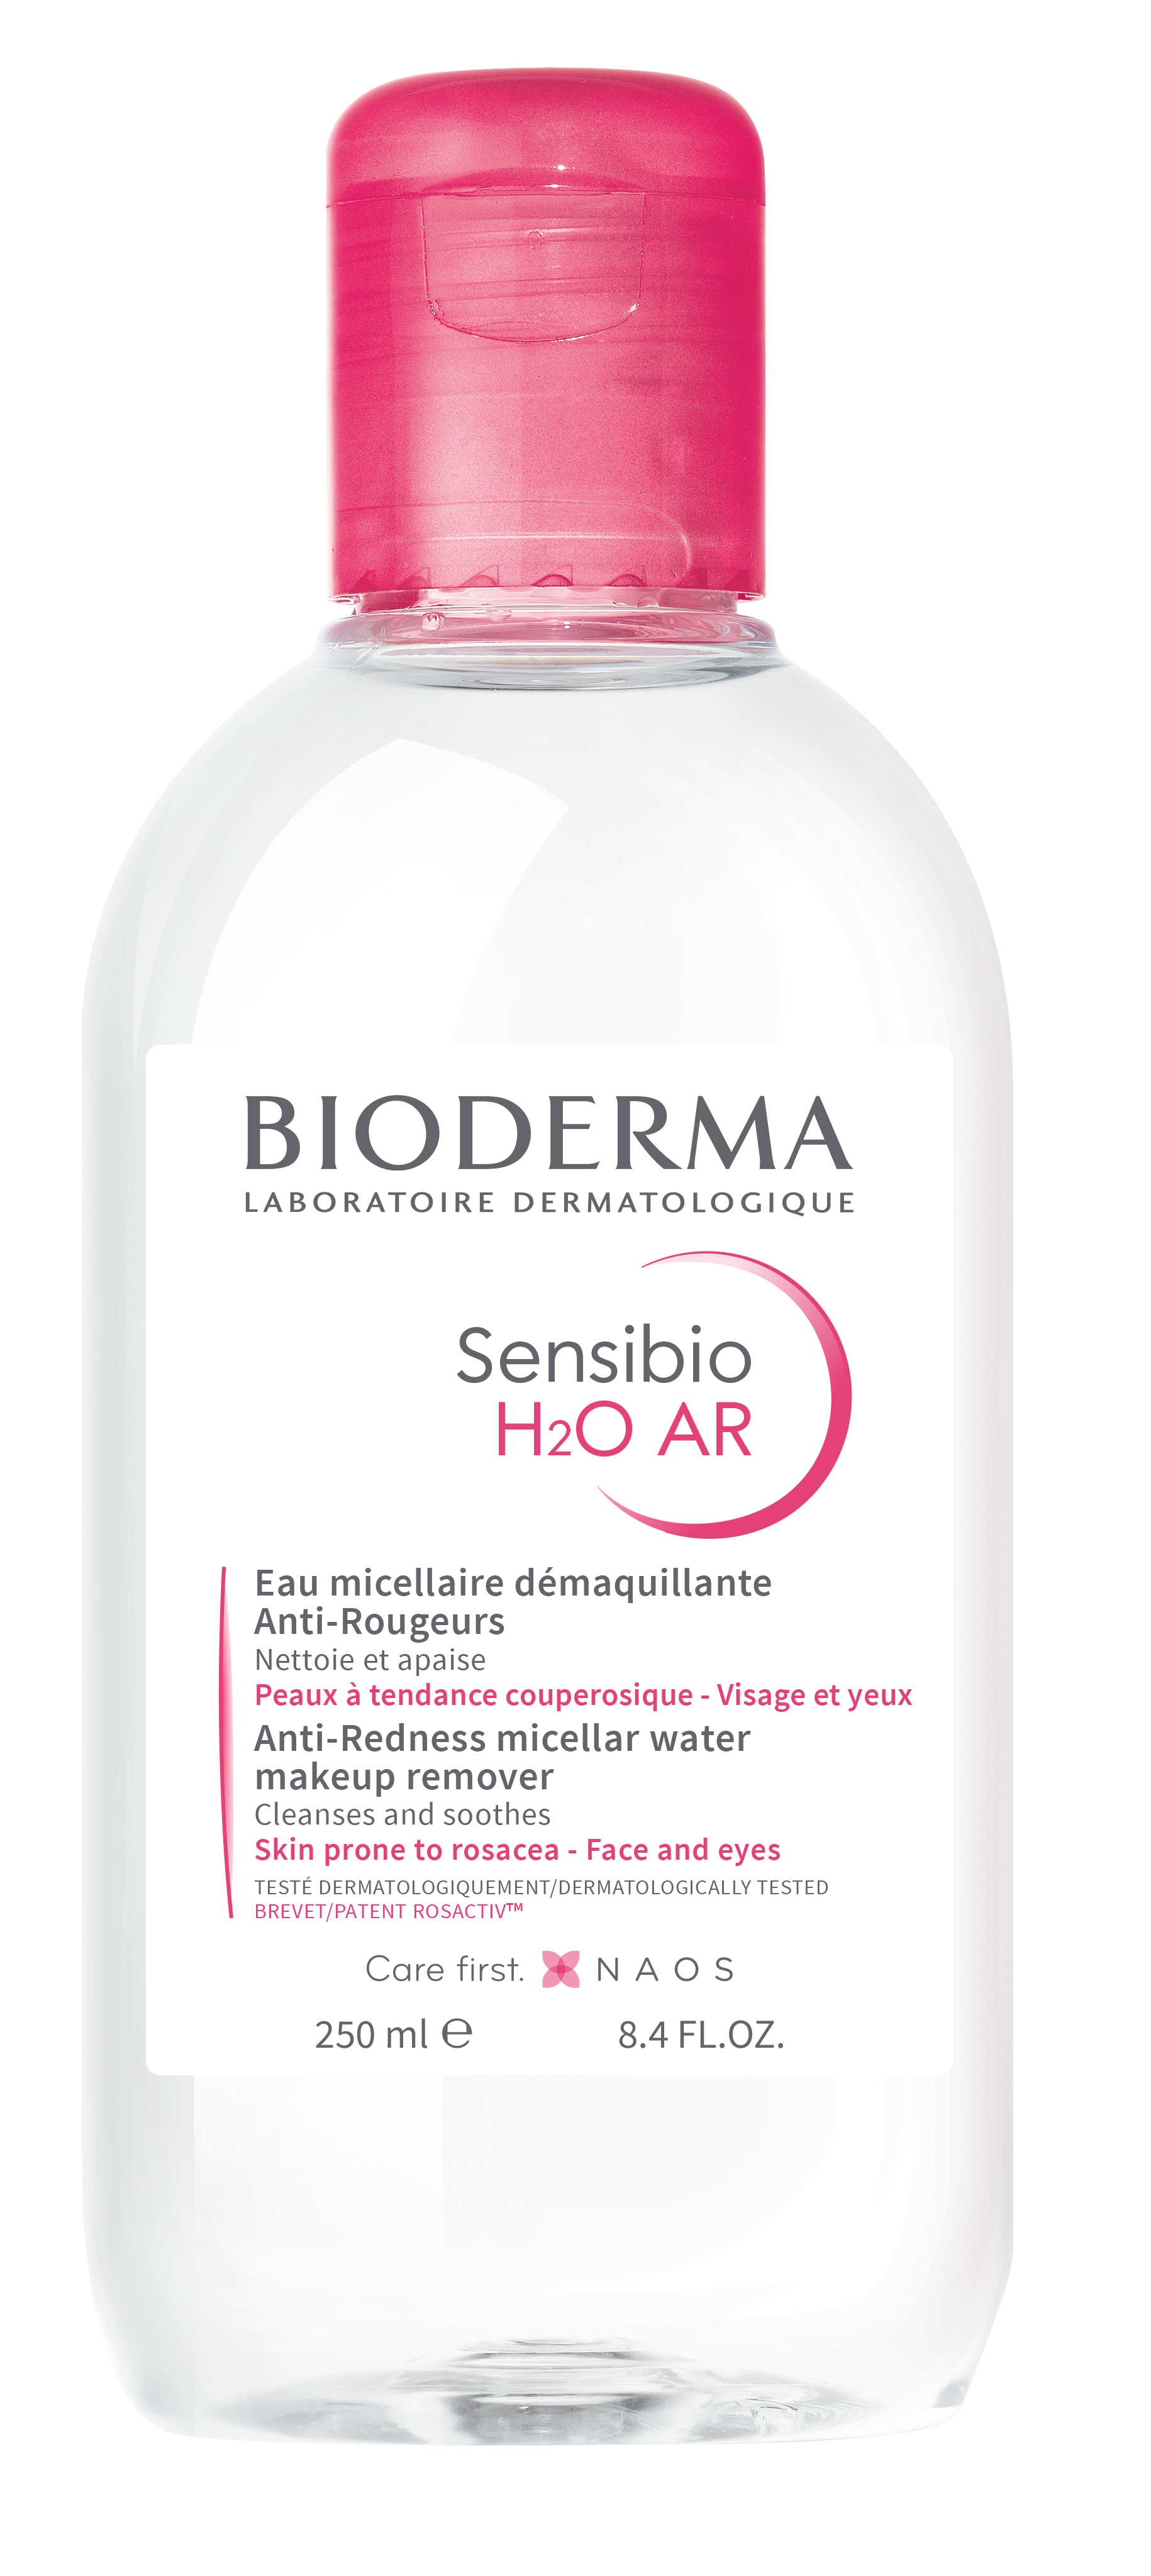 Solutie micelara Sensibio H2O AR, 250 ml, Bioderma